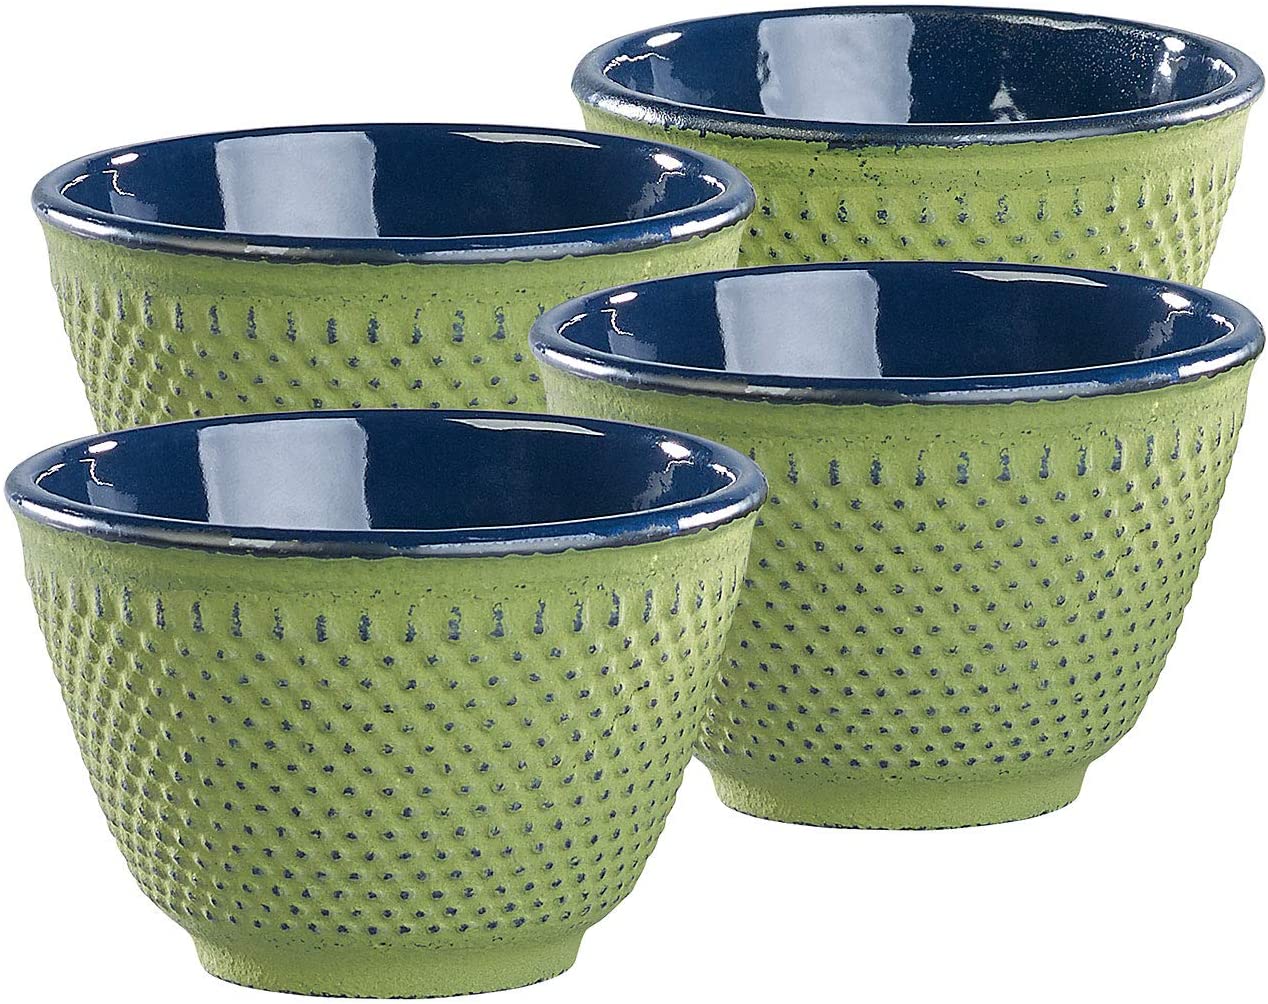 ROSENSTEIN & SOHNE Rosenstein & Söhne Matcha Set of 4 Asian Tea Cups Cast Iron and Enamel Olive Green (Cups)